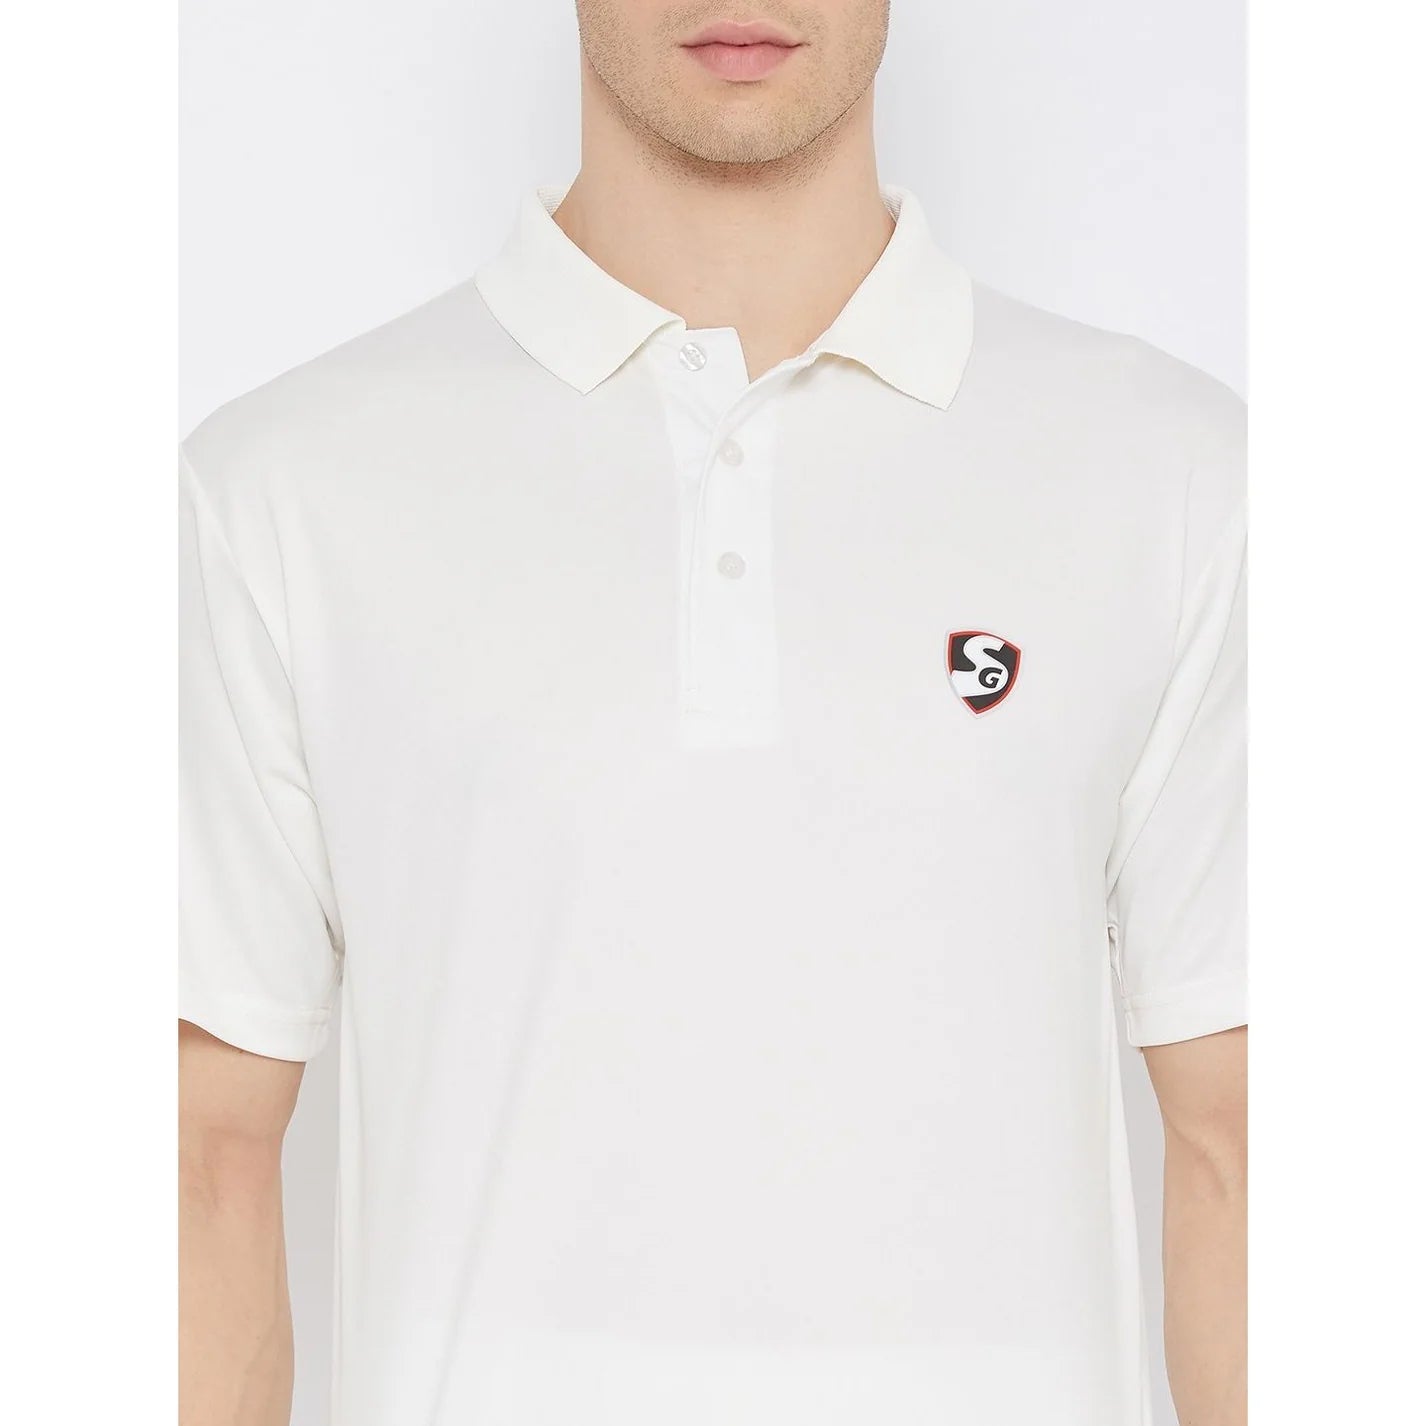 SG Club ( Pant + Shirt ) Half Sleeve